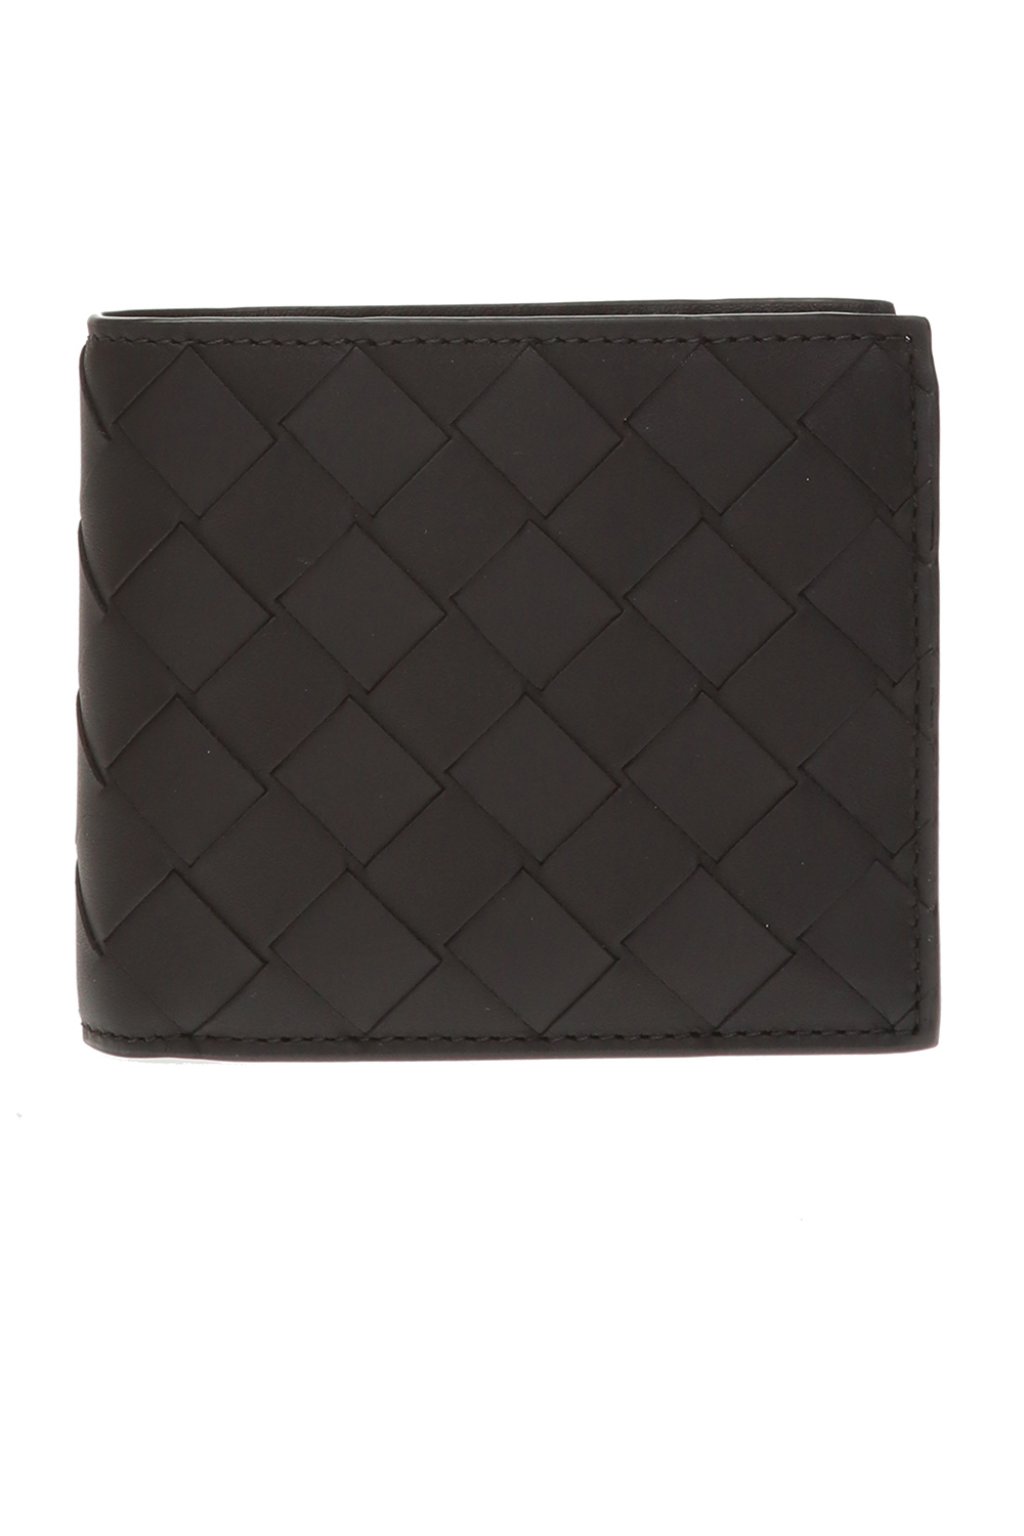 Bottega Veneta Folding wallet | Men's Accessories | IicfShops